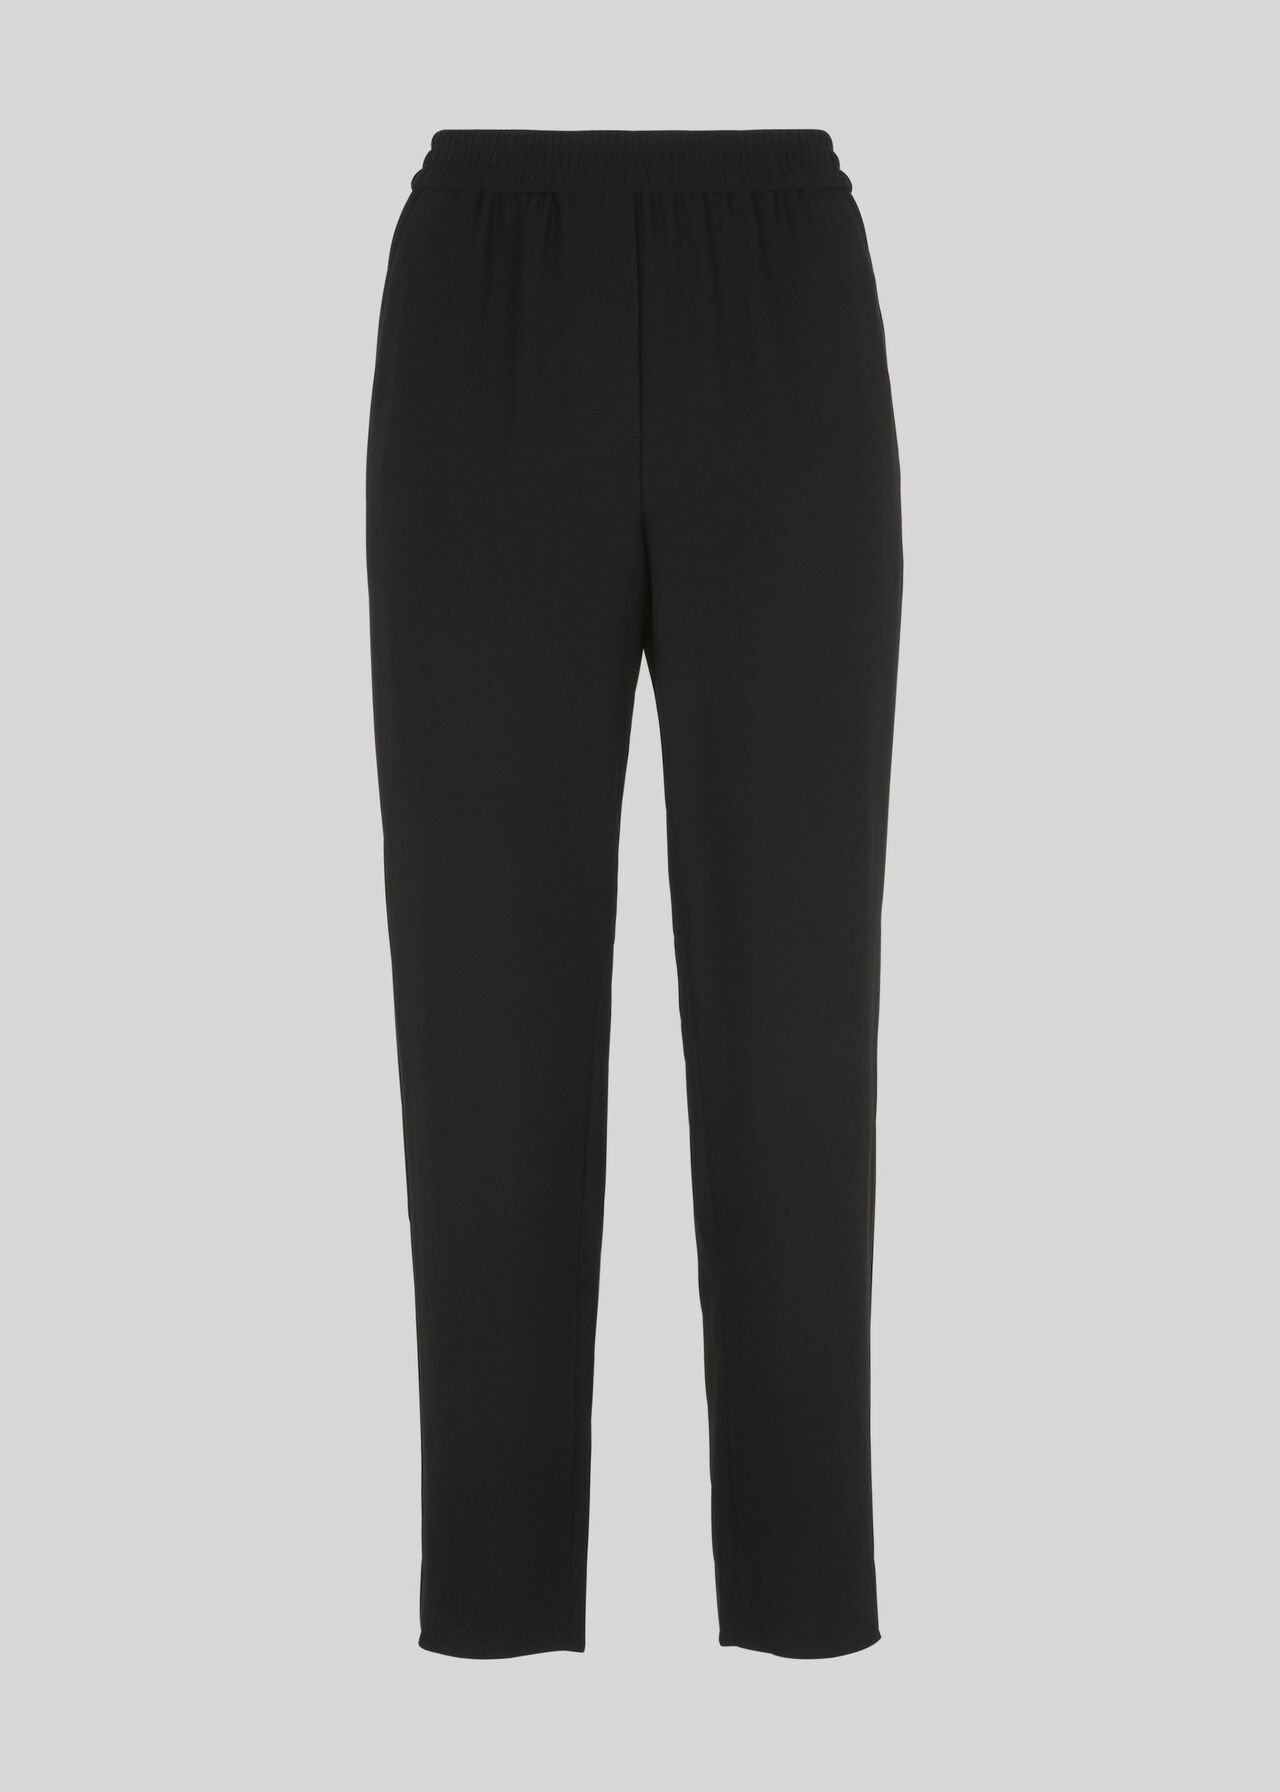 Elyse Side Stripe Trouser Black/Multi